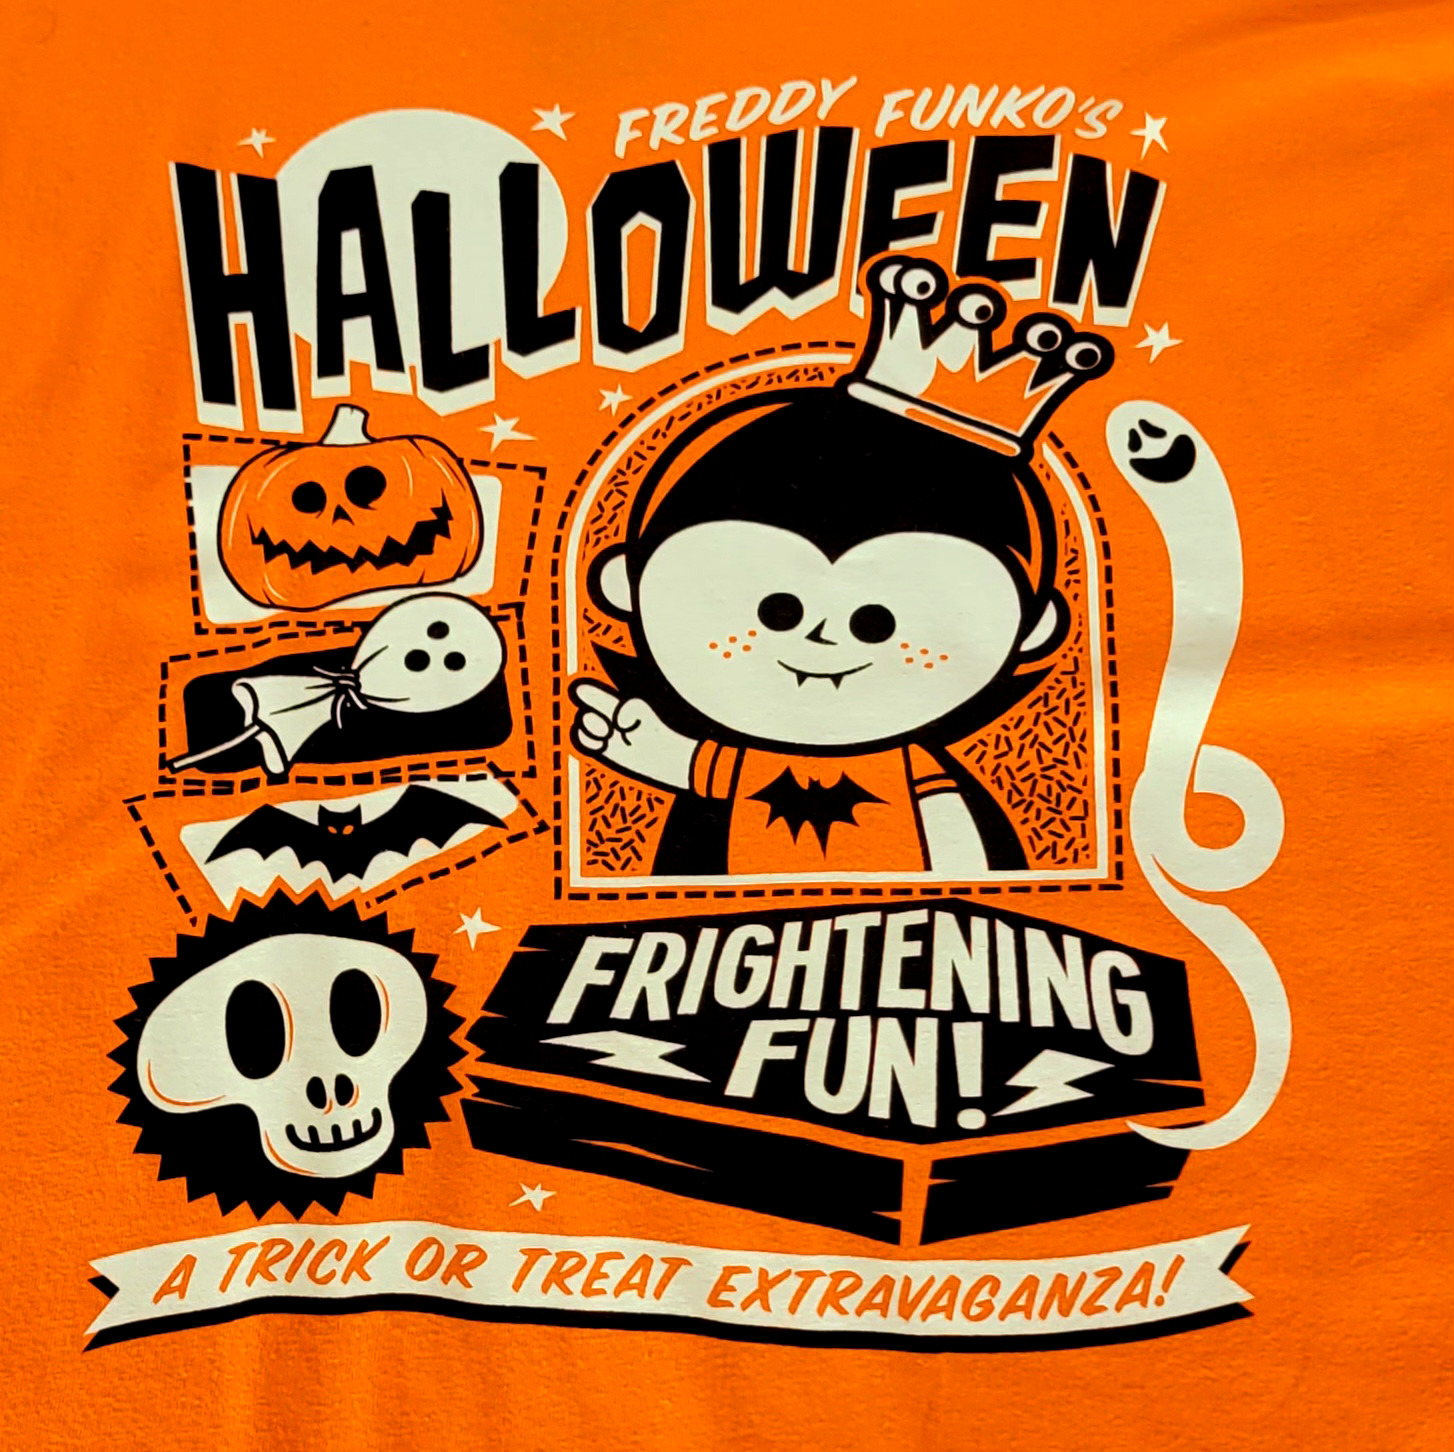 Funko 2016 Freddy Funko\'s Halloween Limited Edition of 200 T-Shirt - (Size 2XL)